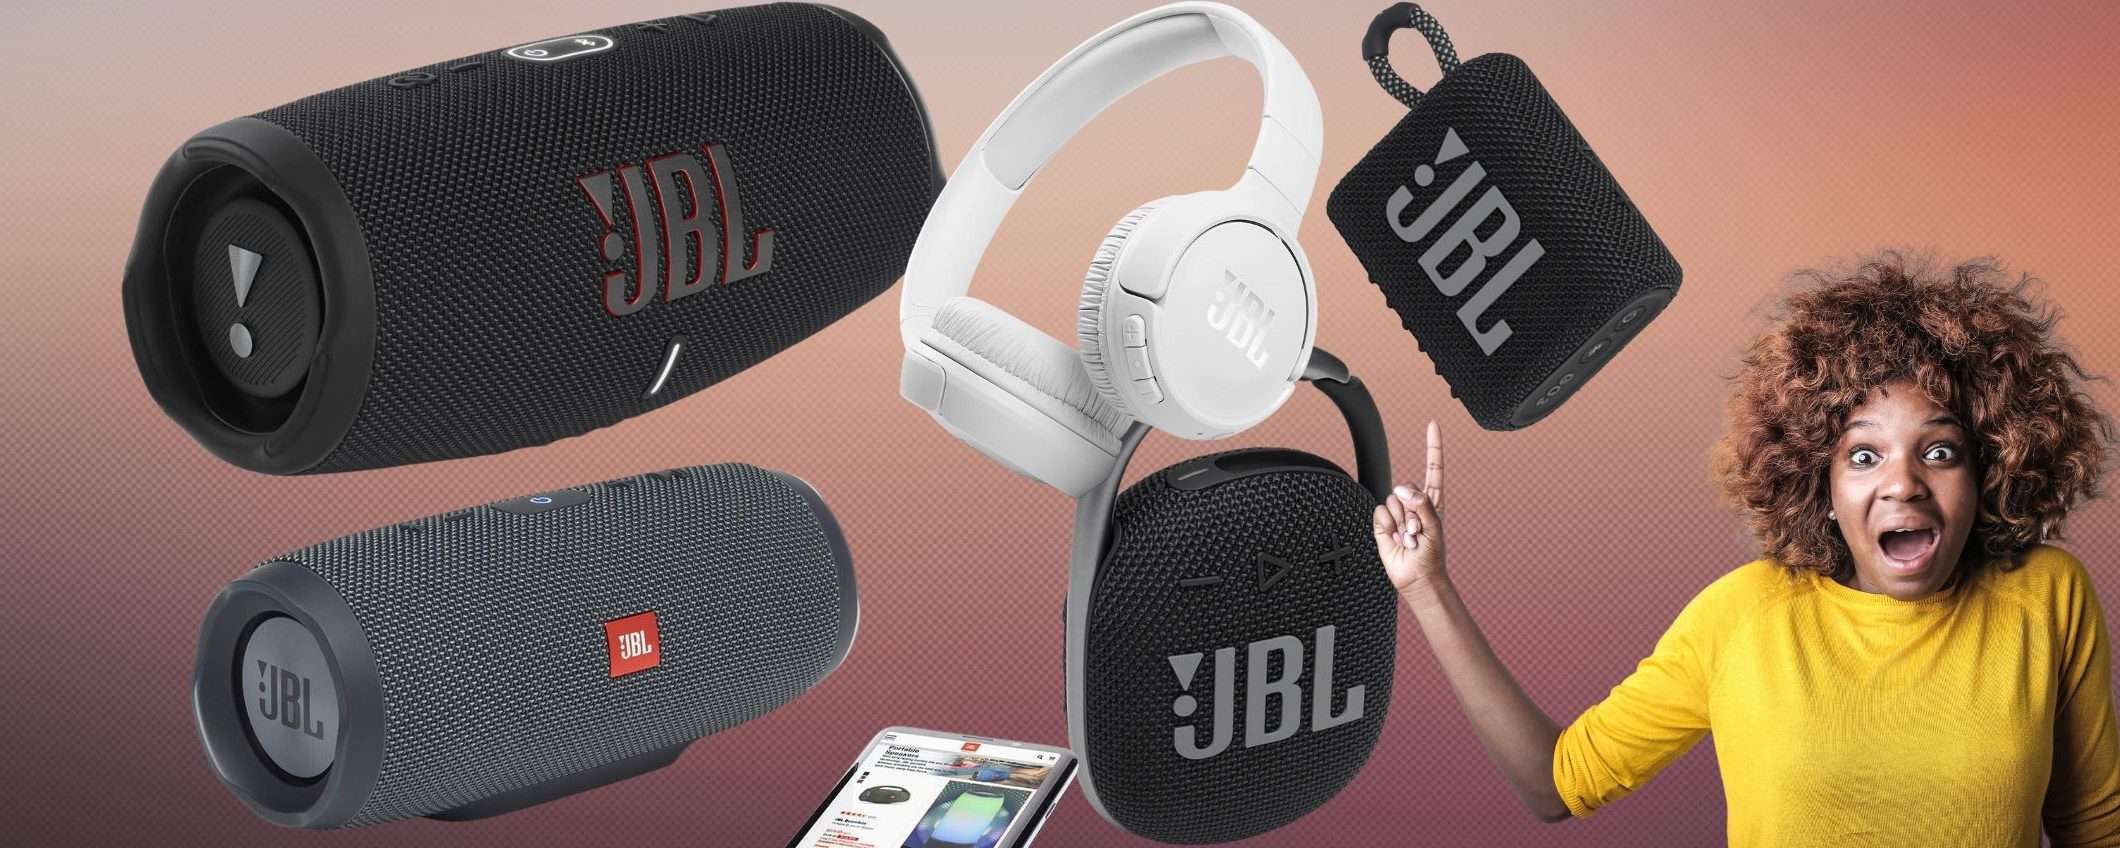 Fuoritutto JBL su Amazon: cuffie e speaker Bluetooth a partire da 29€